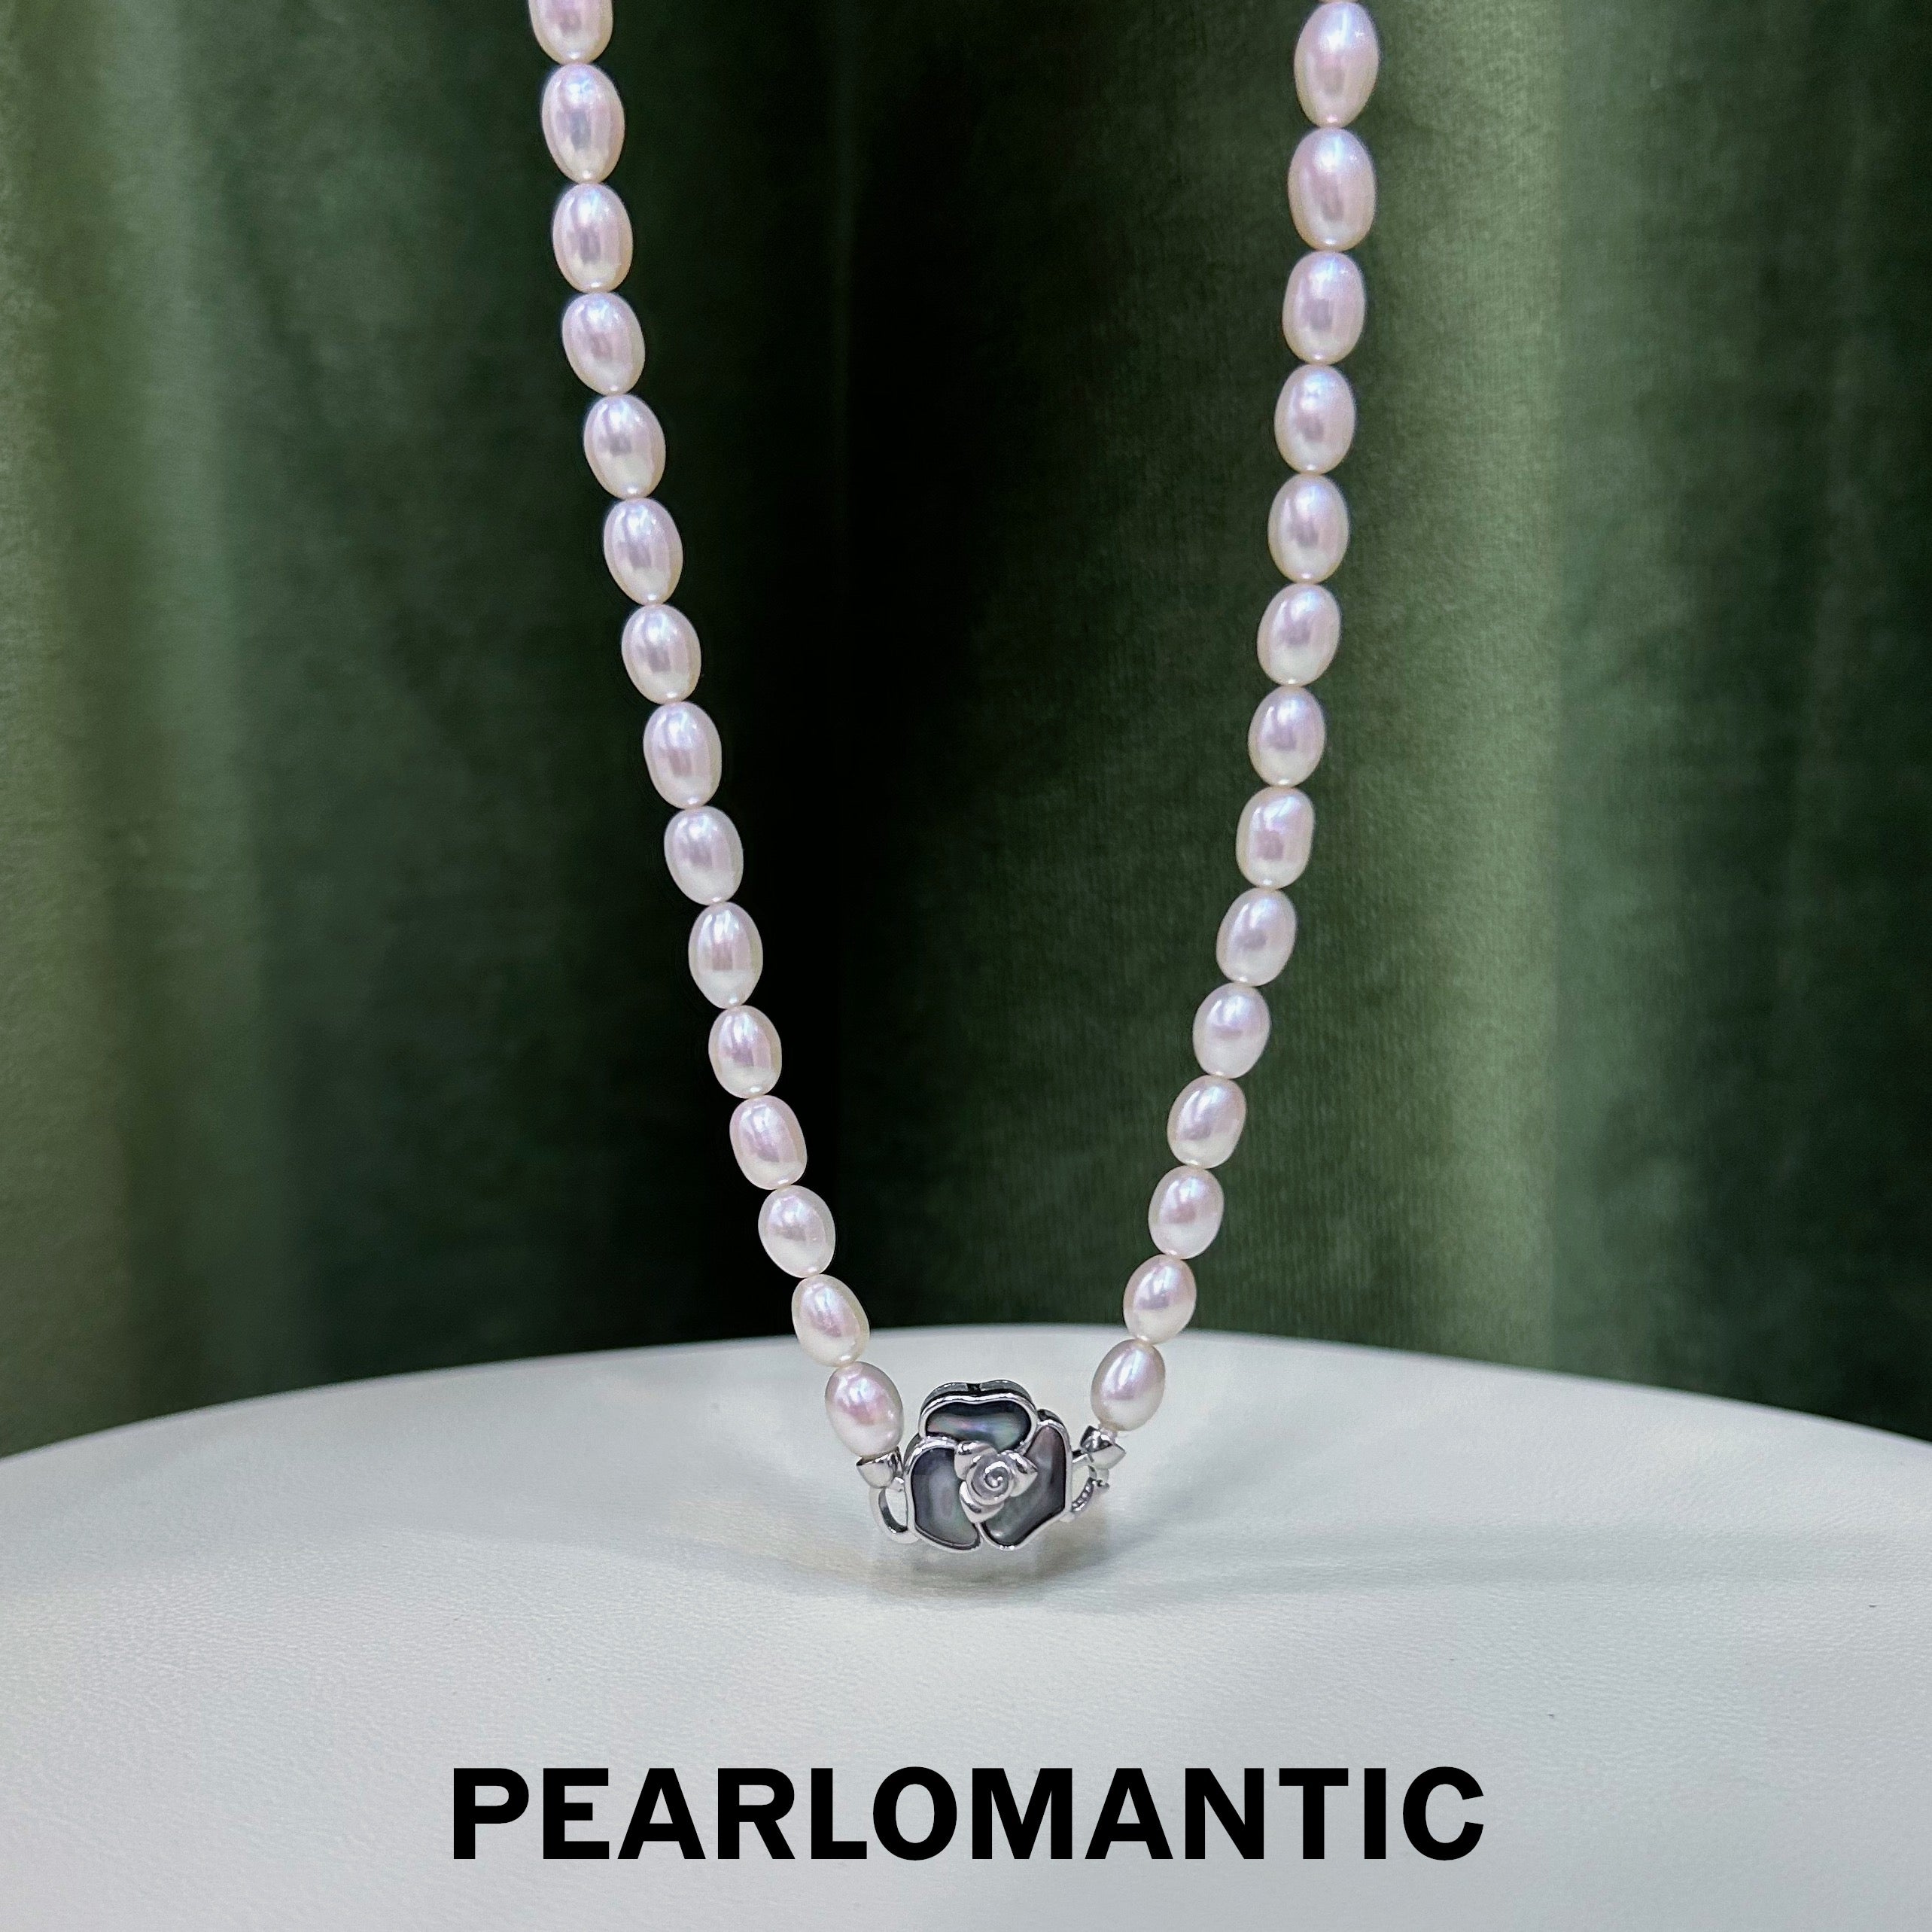 Buy AstroCart Safed ki Moti Mala 7mm Pearl Mala 108 Beads सफ़ेद मोती की  माला Original Certified By Lab Pearl Necklace at Amazon.in